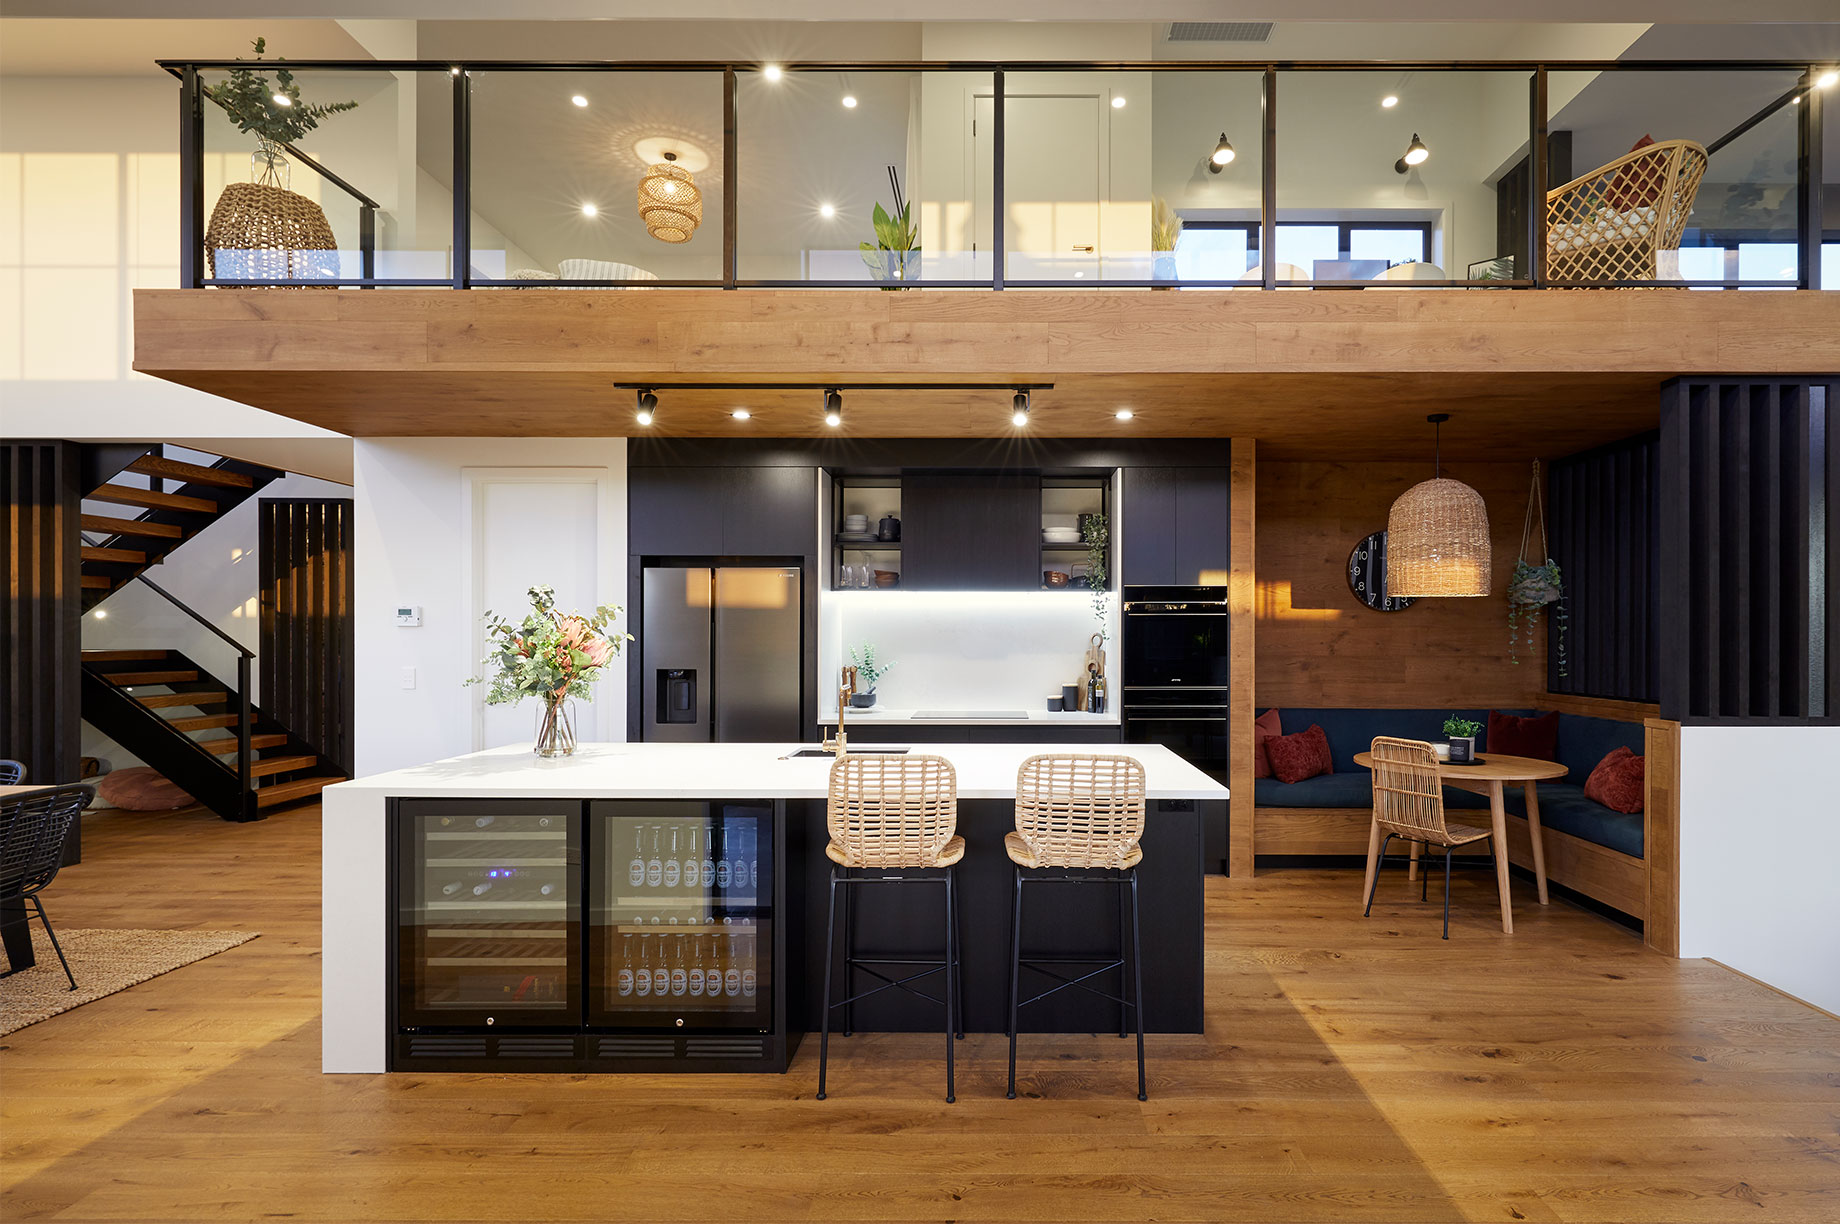 Waikato showhome kitchen with wooden floors interior